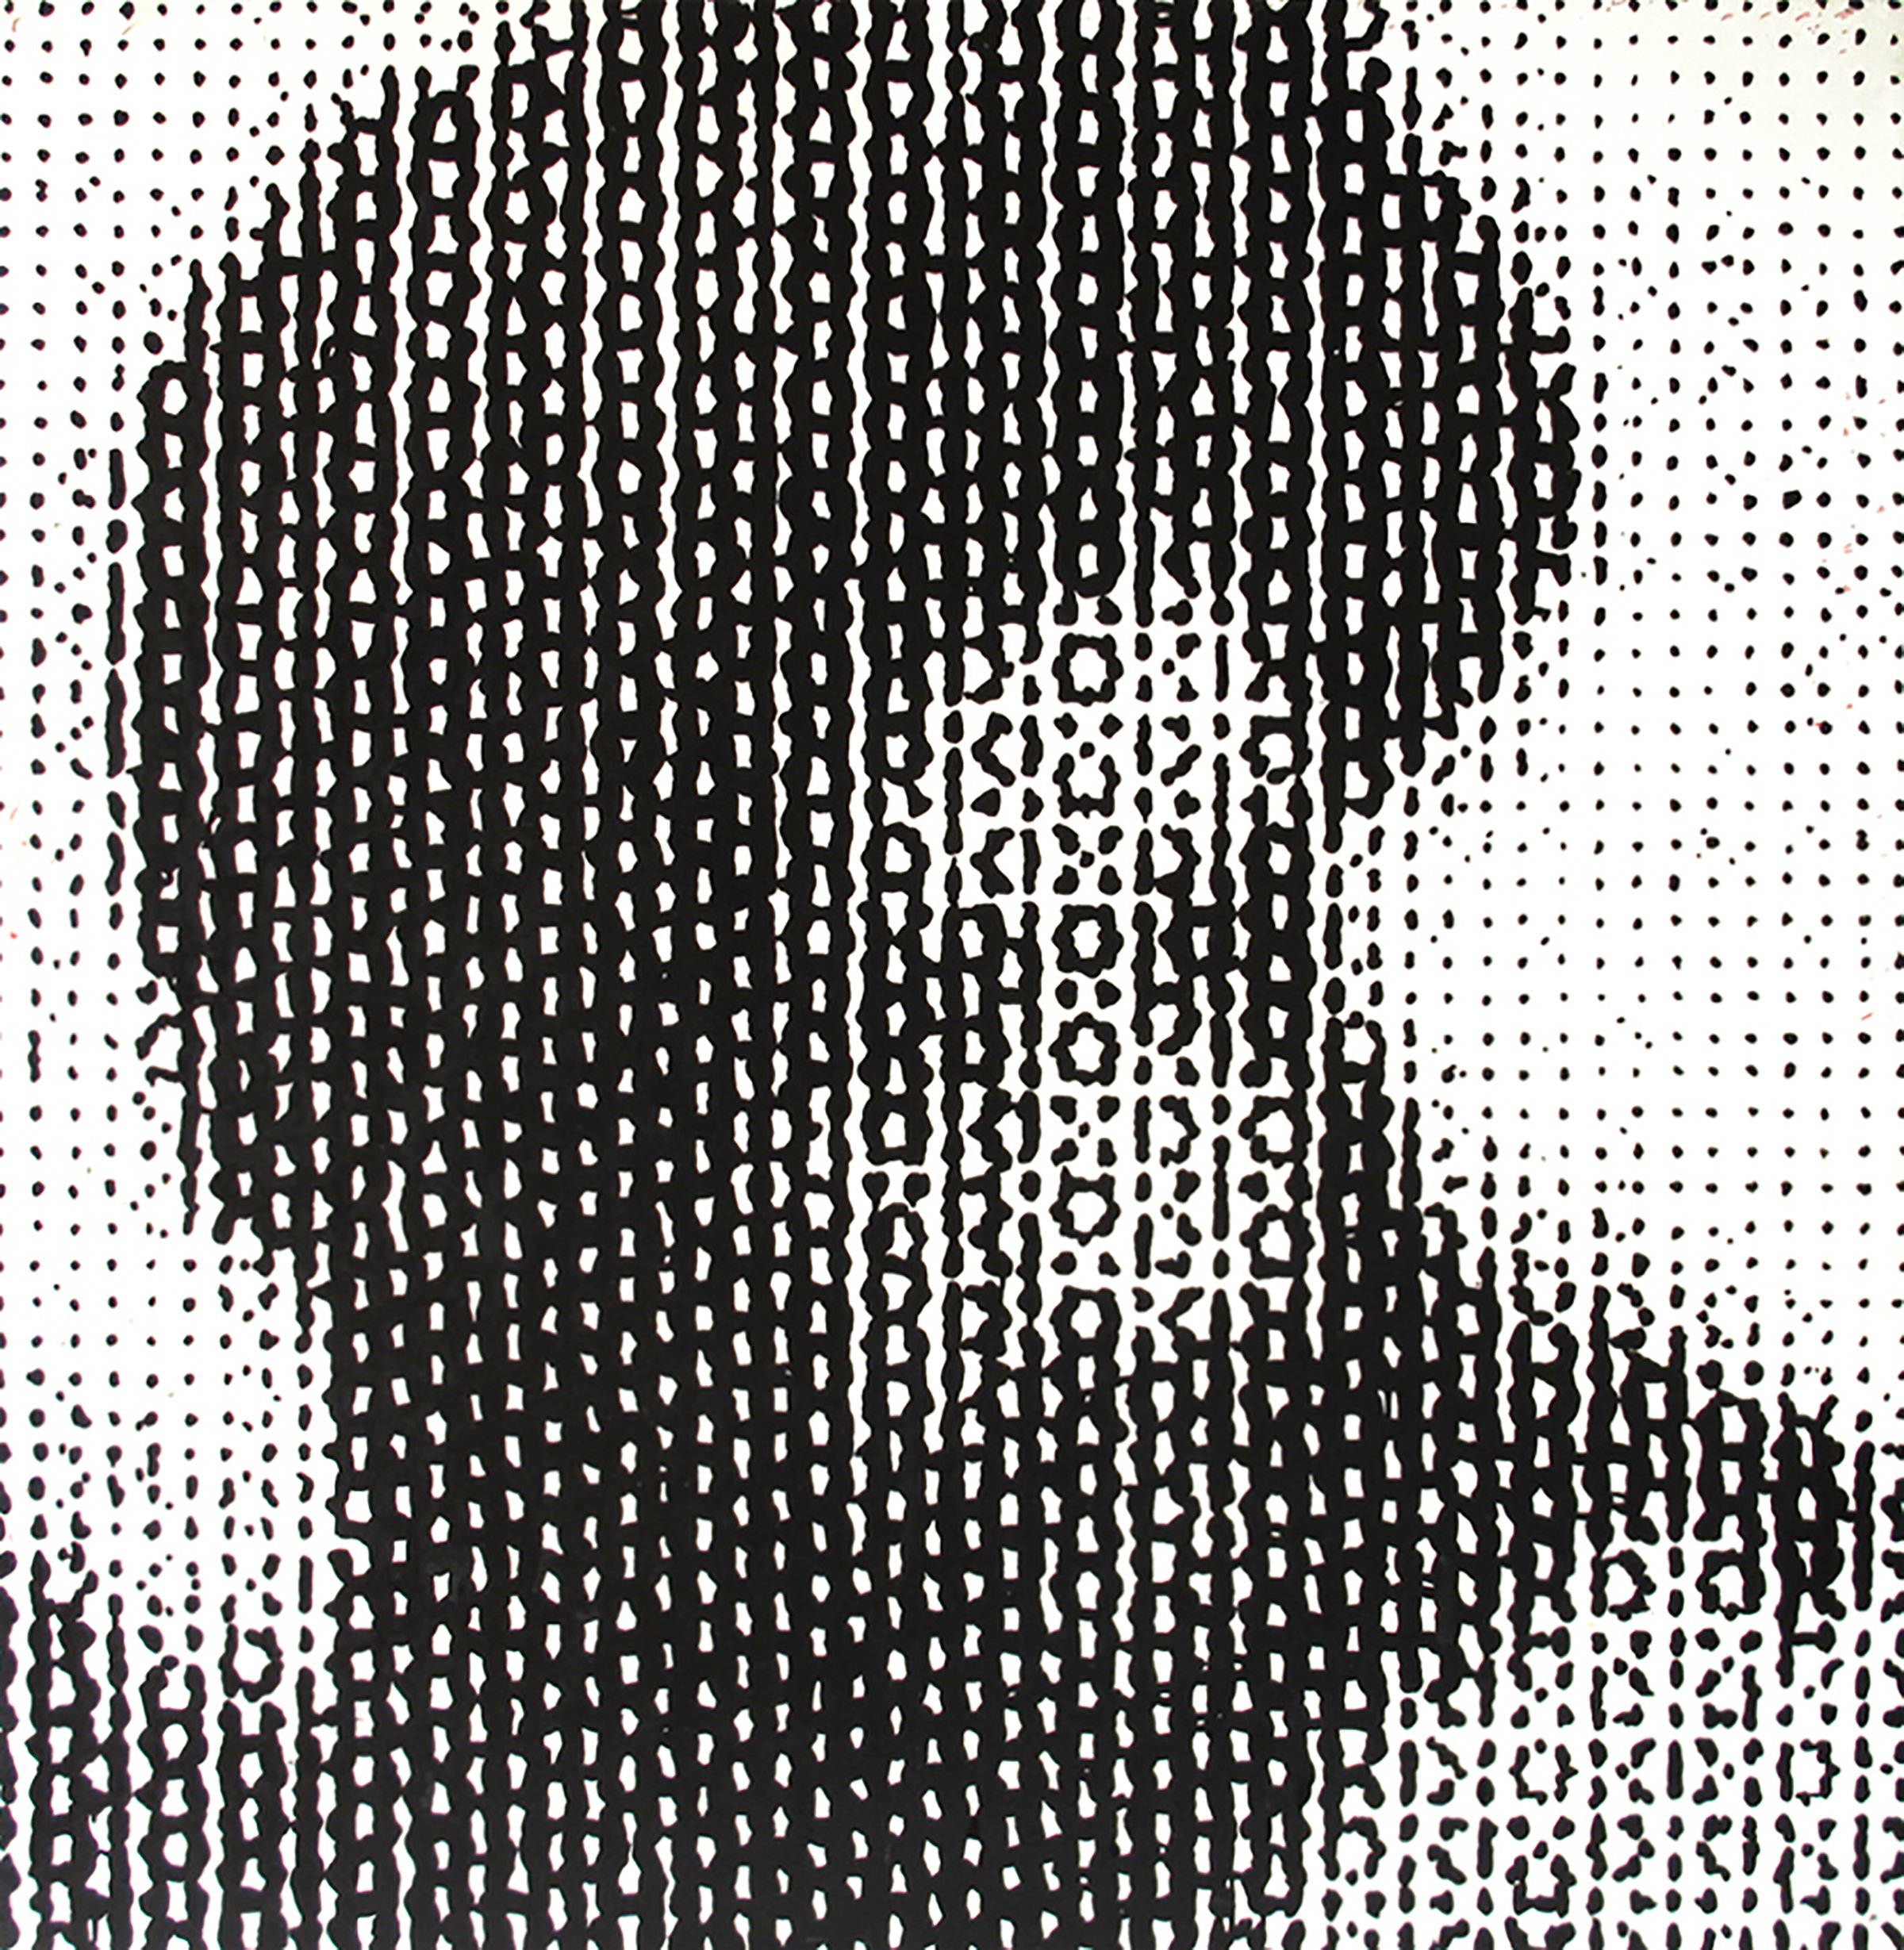 The Third Man 2005 Acrylic on gesso on board 119 x 116 cm 